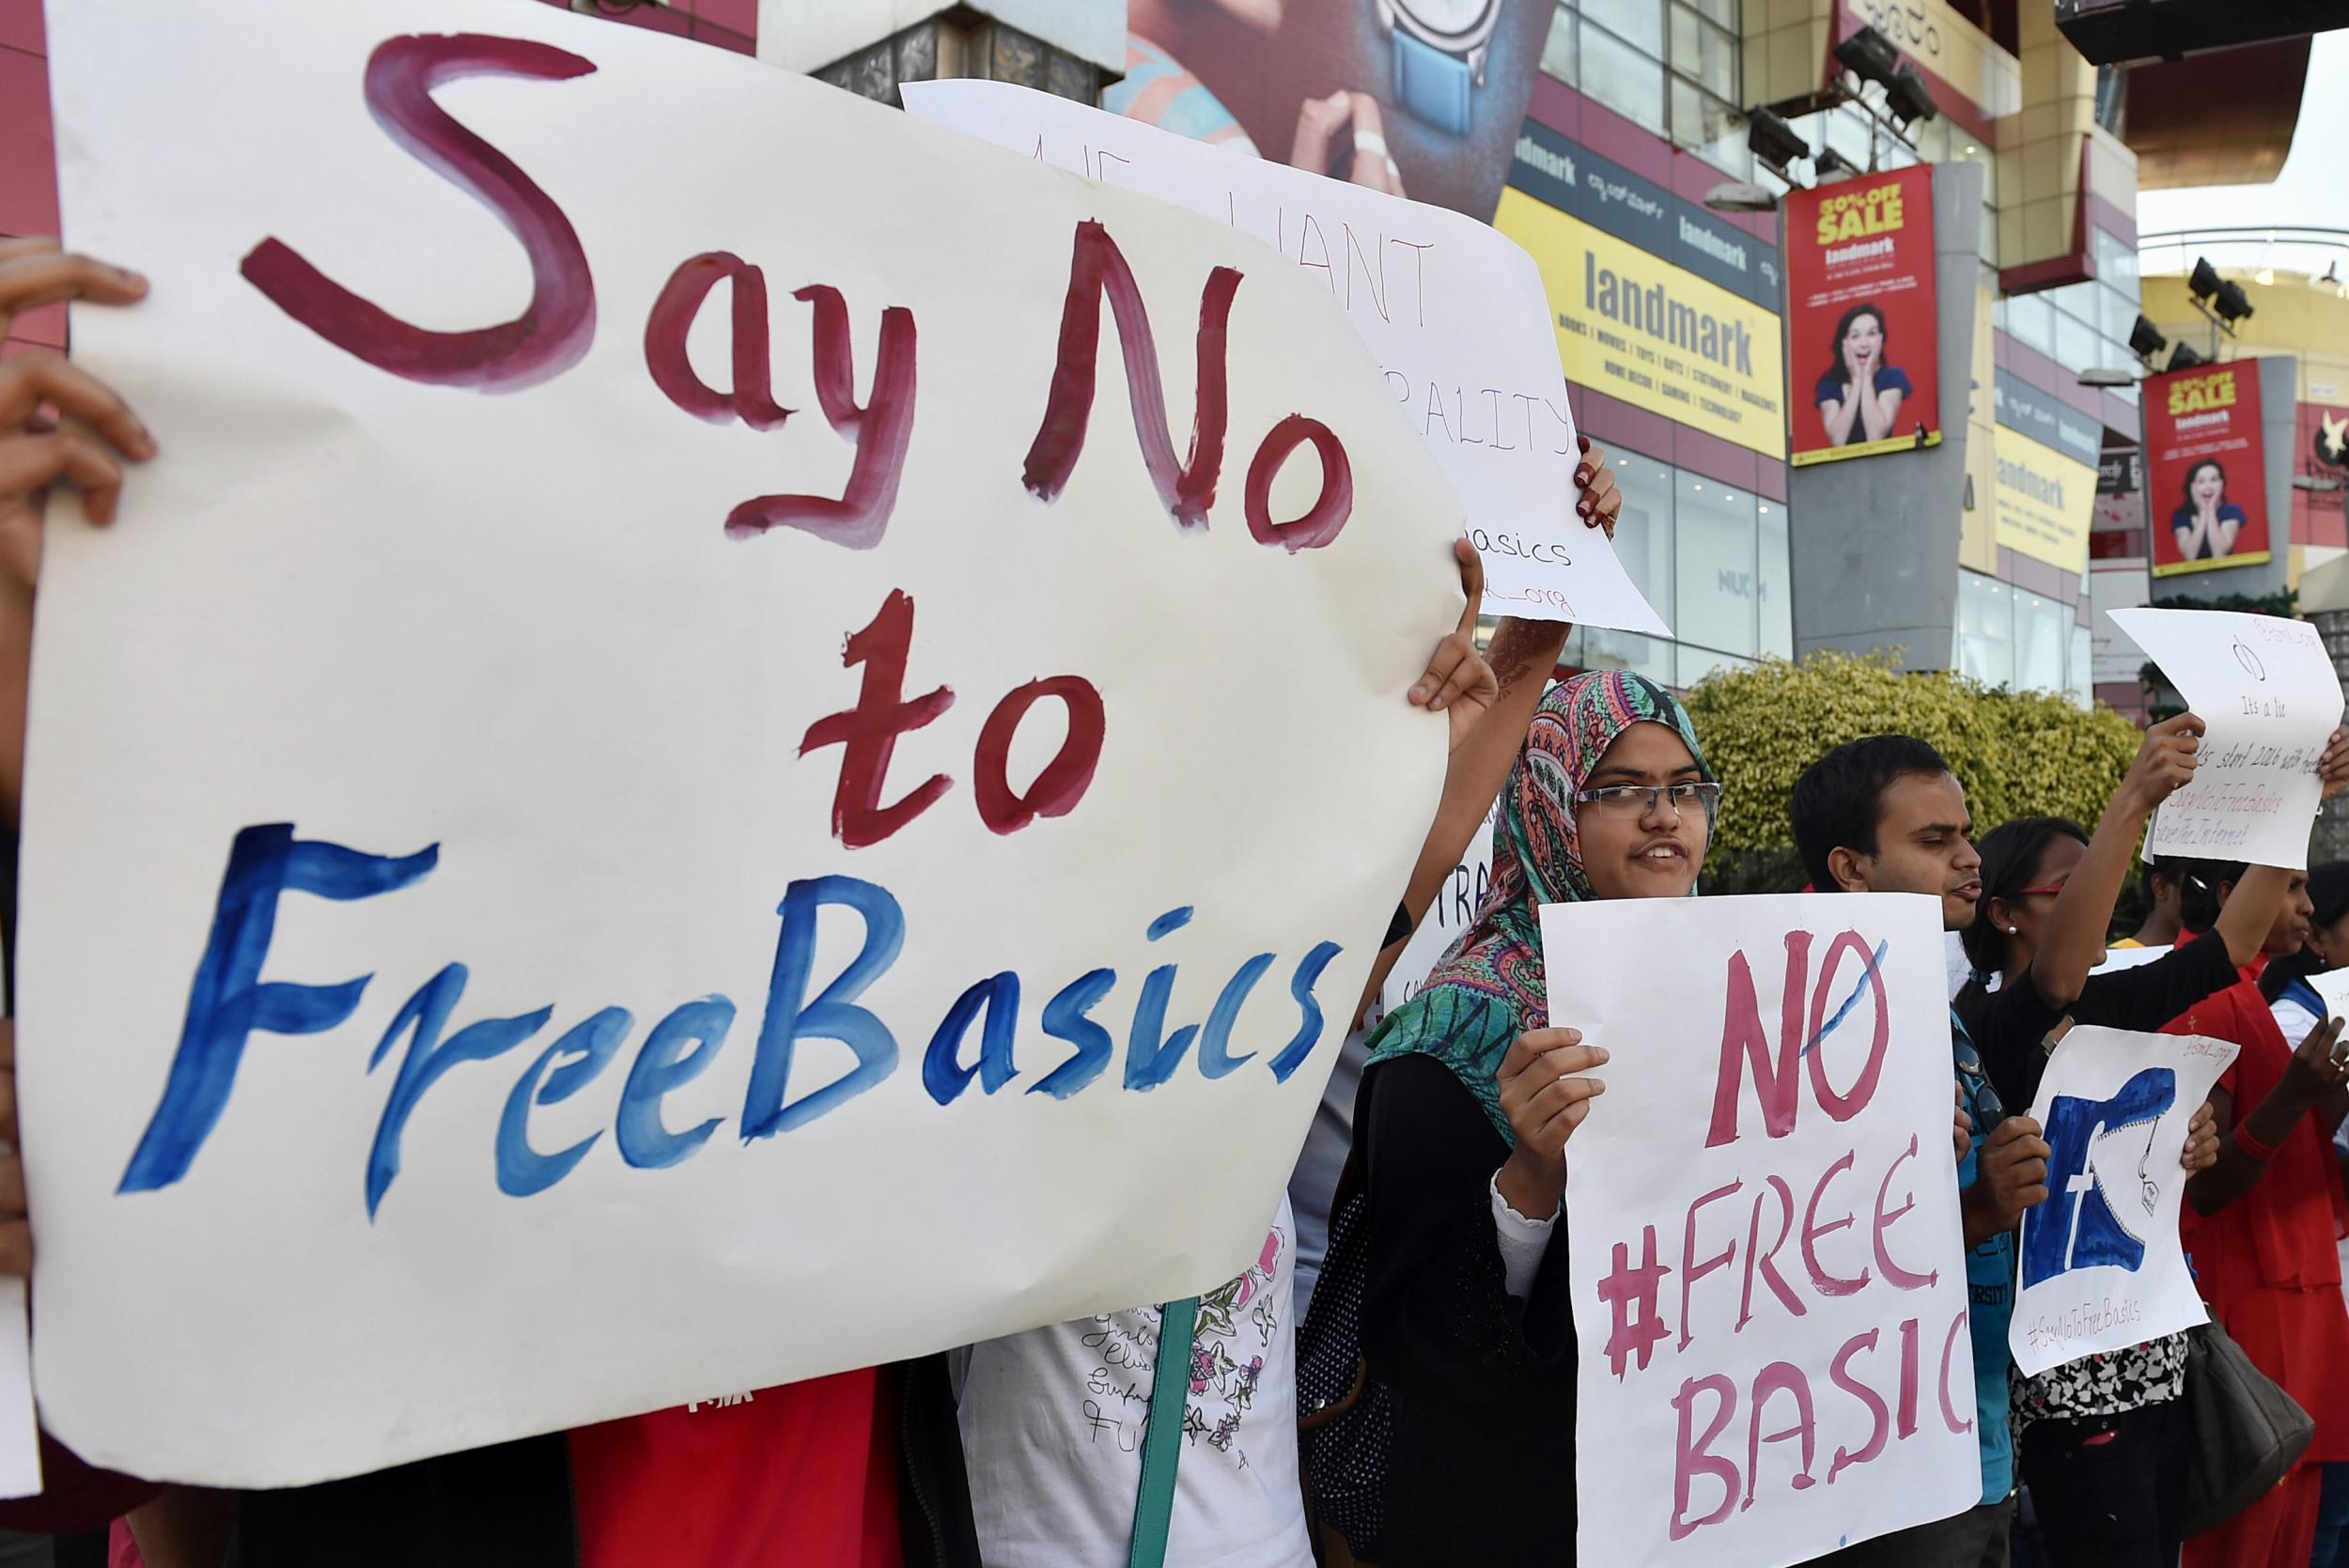 Net neutrality activists protest against Free Basics in Bangalore